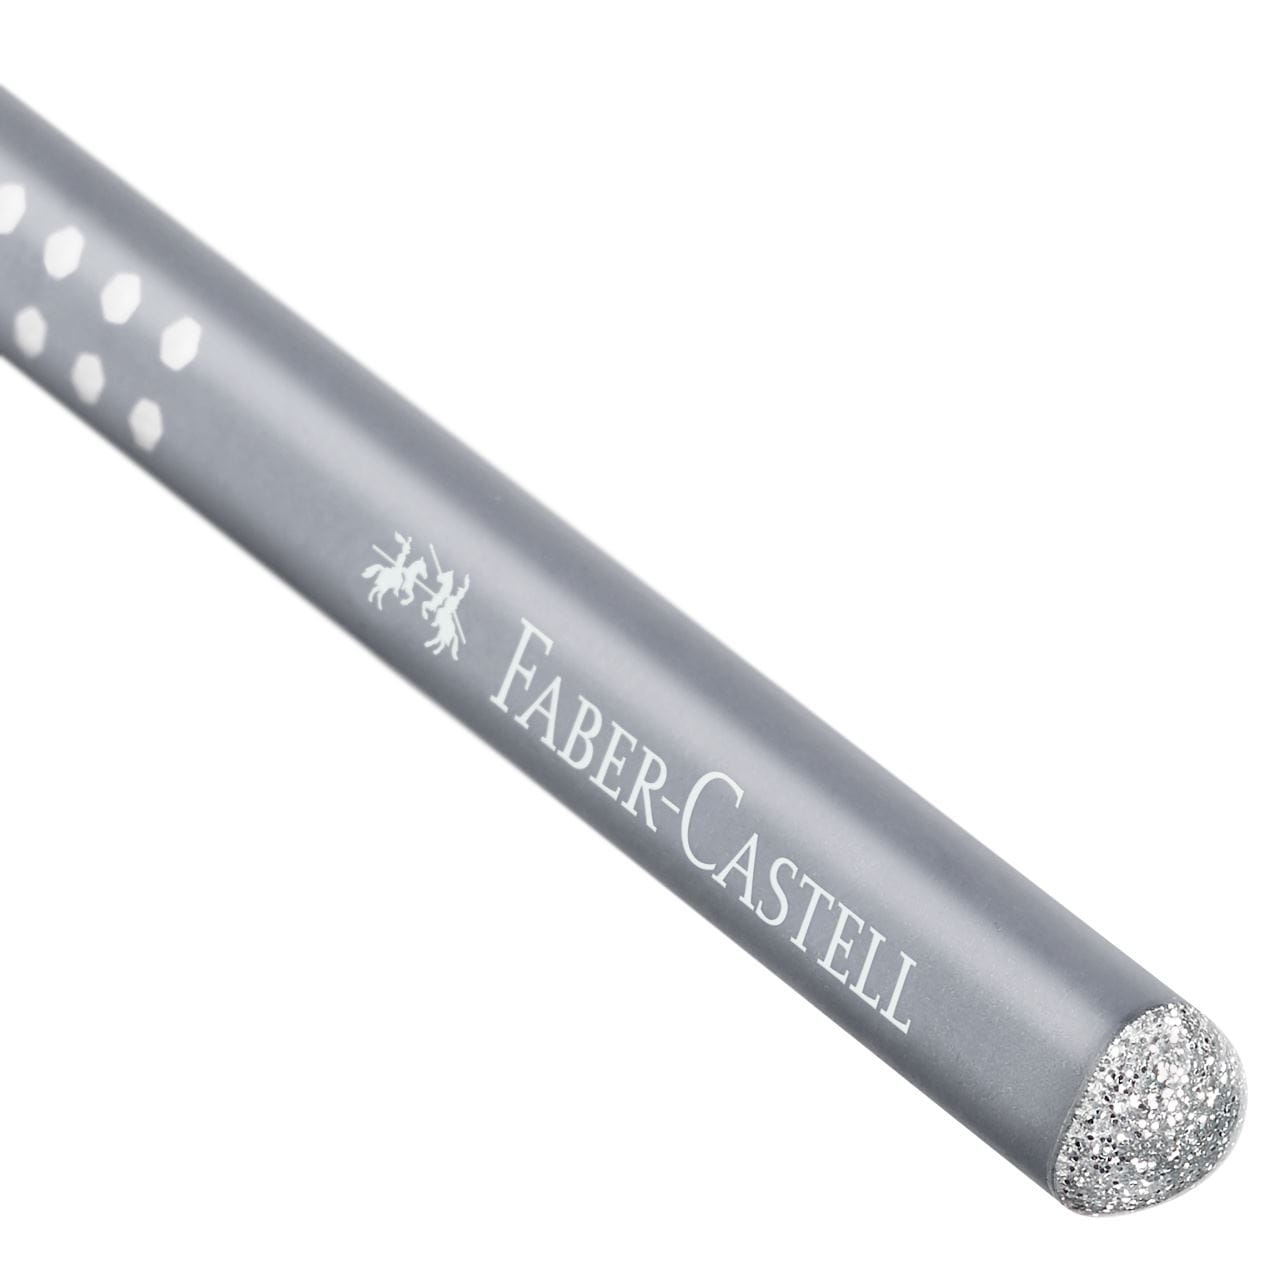 Faber-Castell - Sparkle graphite pencil, pearl grey